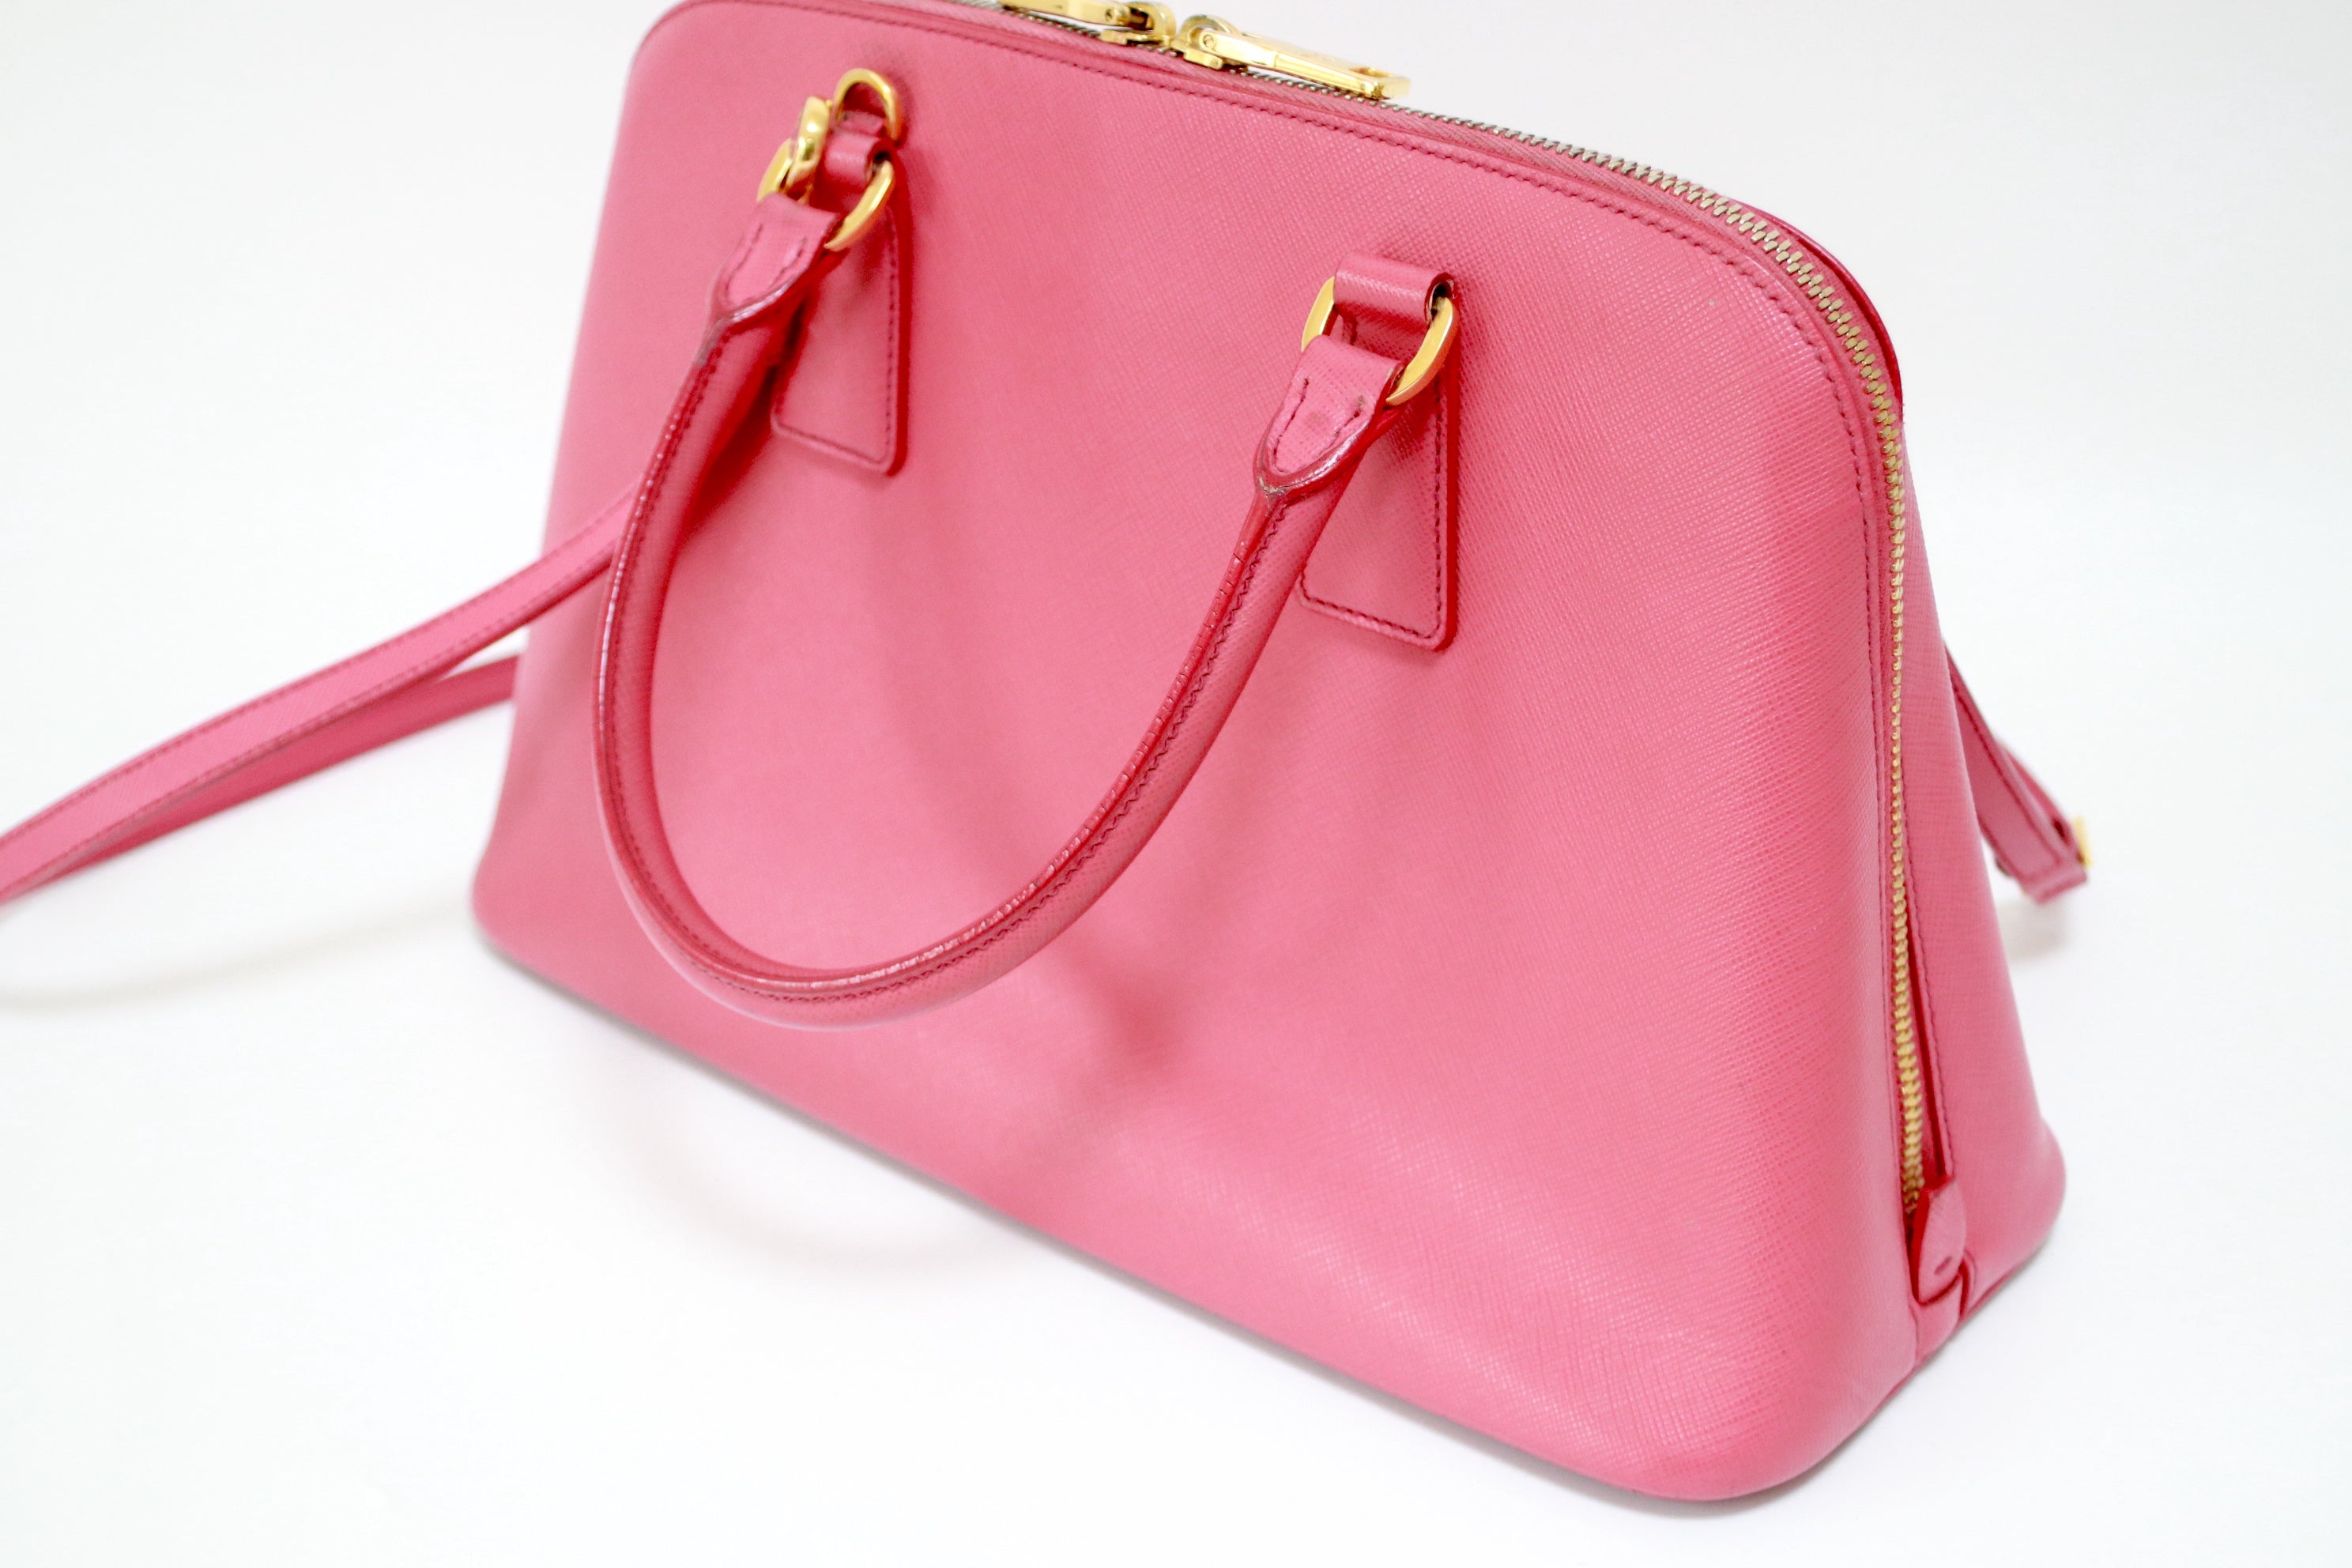 Prada Saffiano Handbag Pink Used (7084)